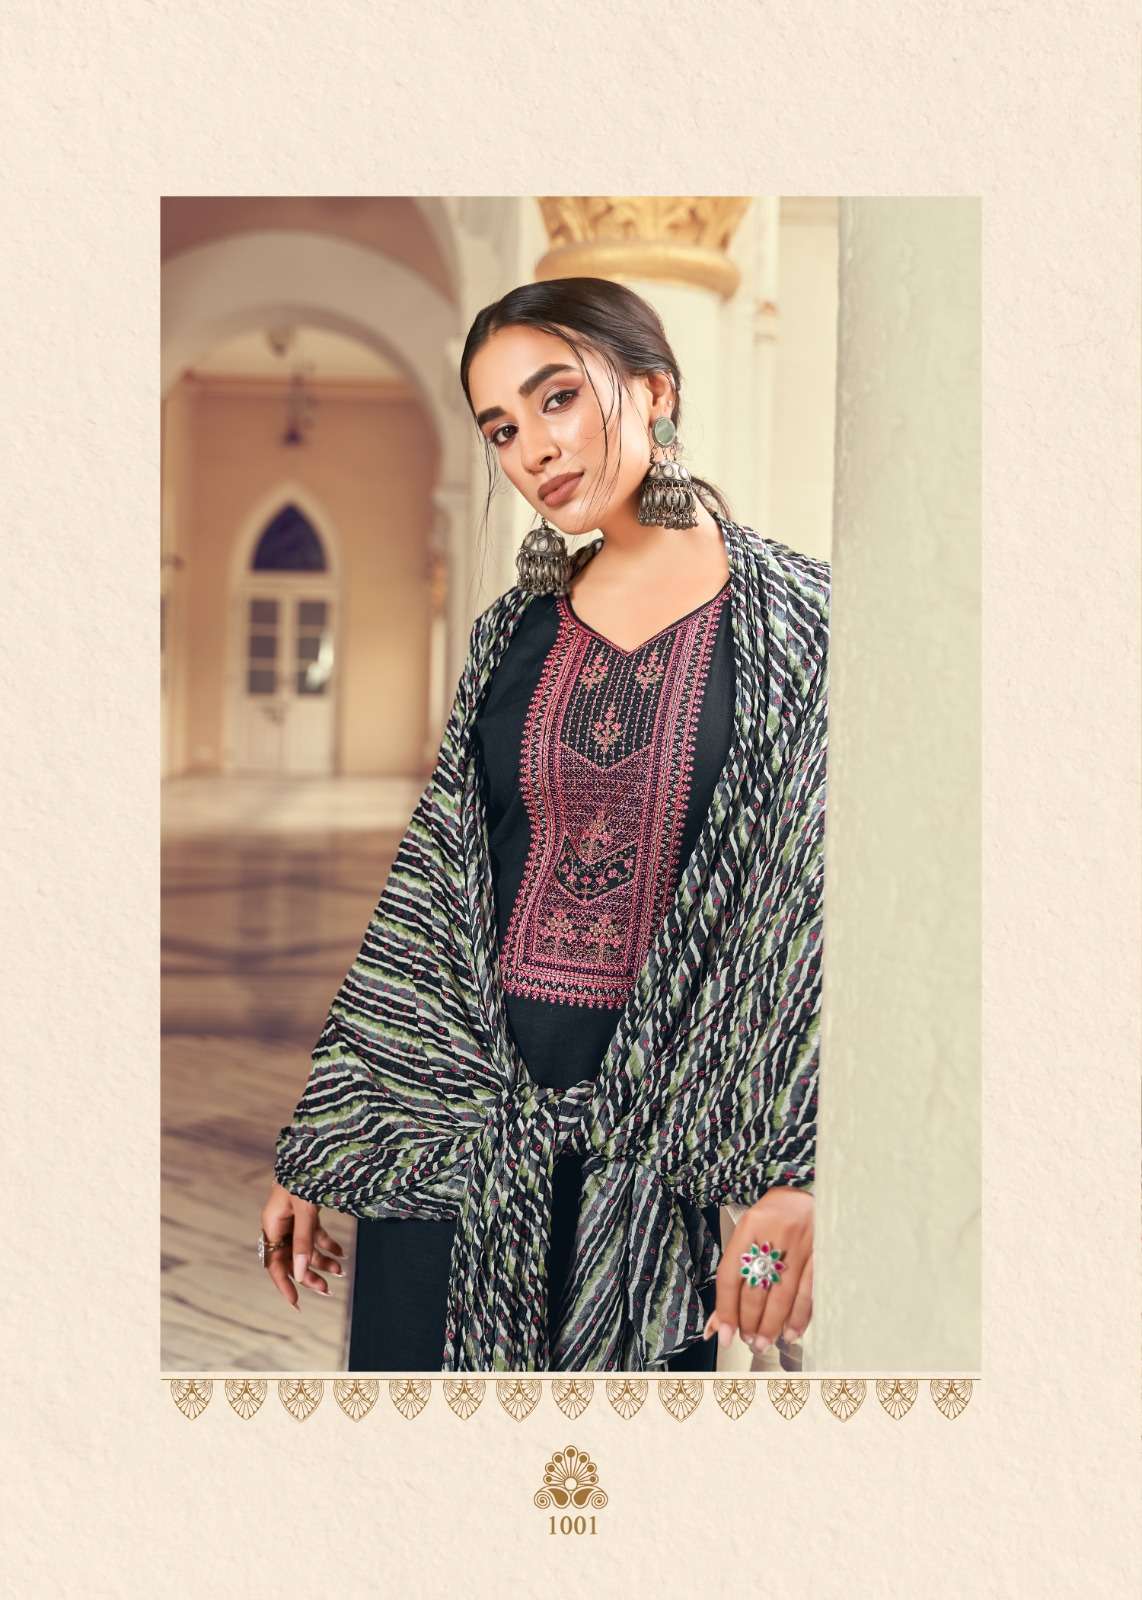 hermitage clothing lehariya 1001-1008 series viscose rayon embroidered work salwar kameez surat